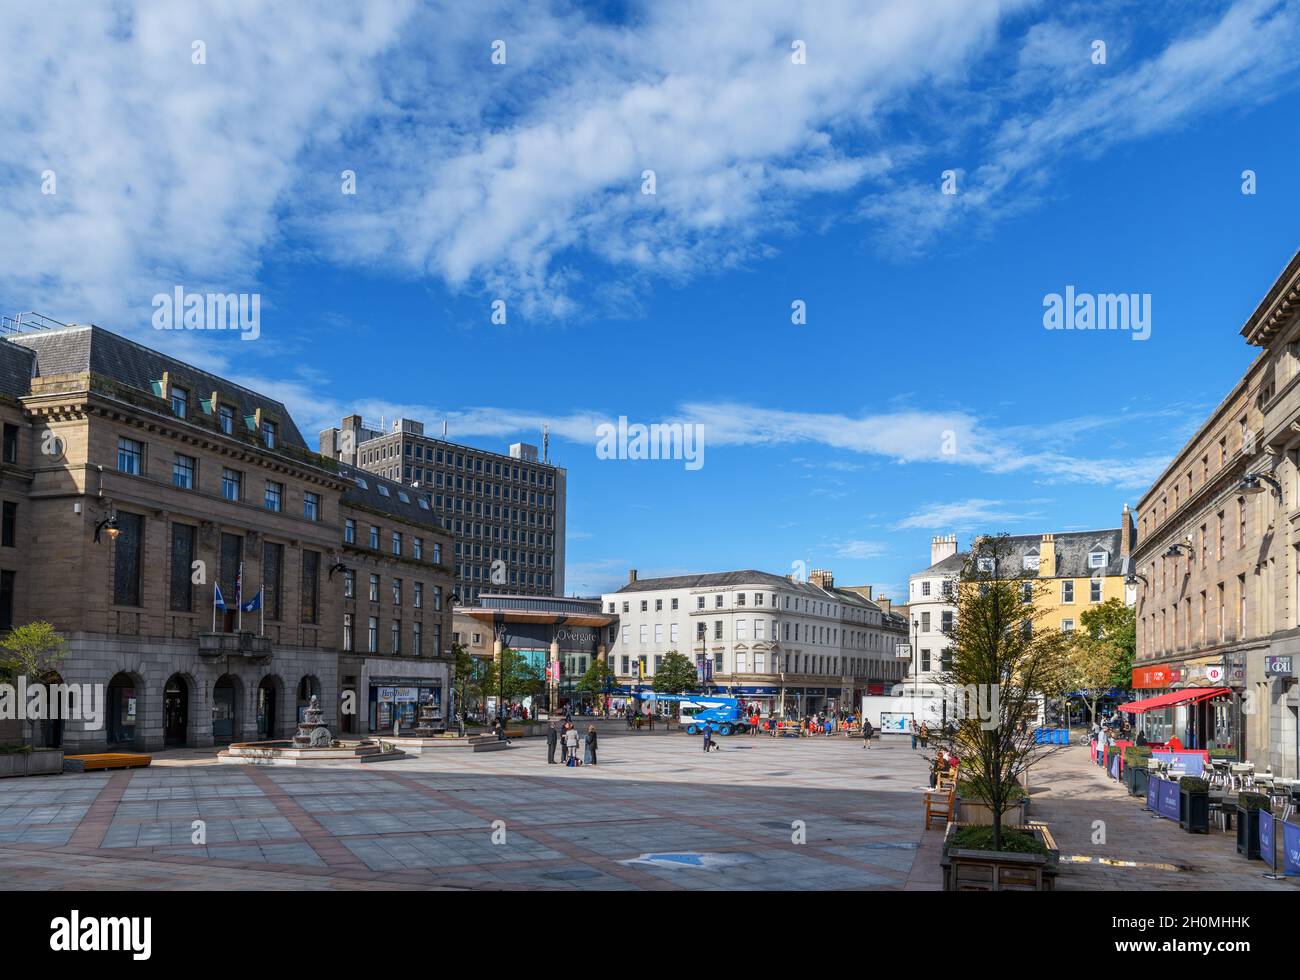 City Square en el centro de Dundee, Escocia, Reino Unido Foto de stock